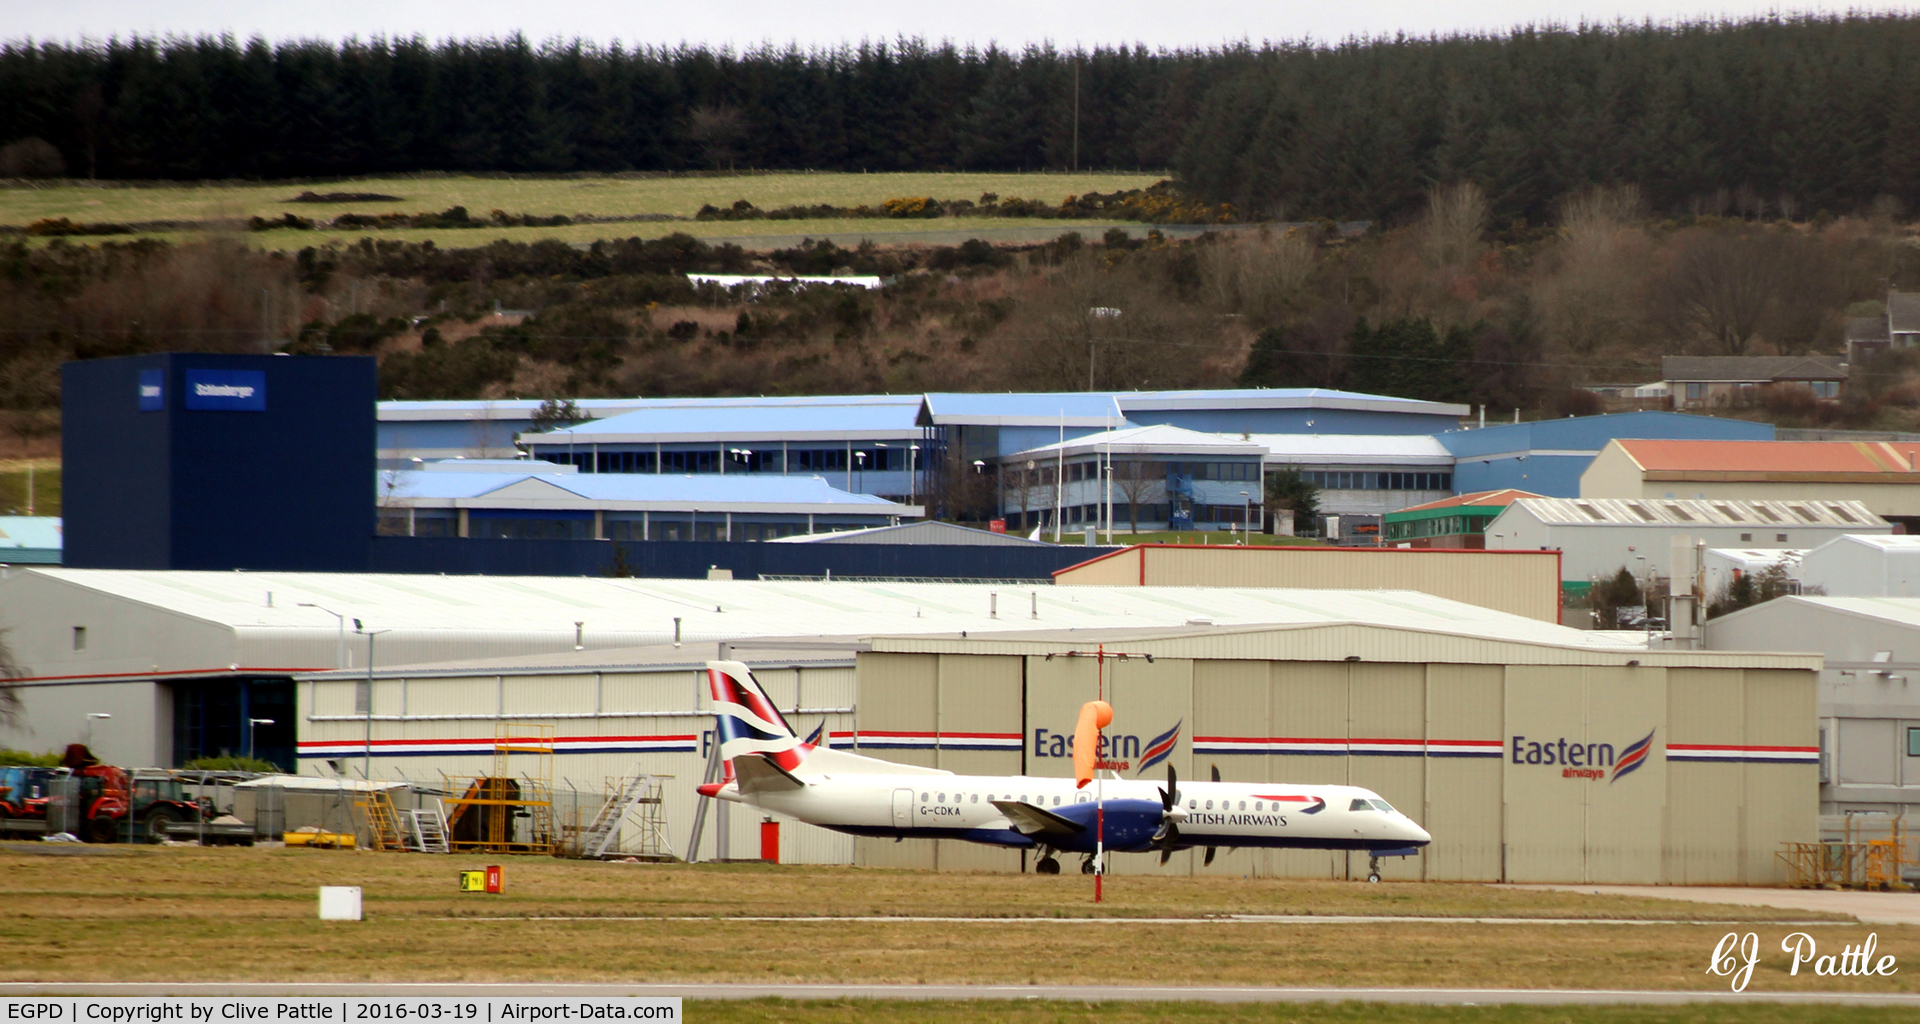 Aberdeen Airport, Aberdeen, Scotland United Kingdom (EGPD) - Eastern Airways maintenance hangar at Aberdeen EGPD